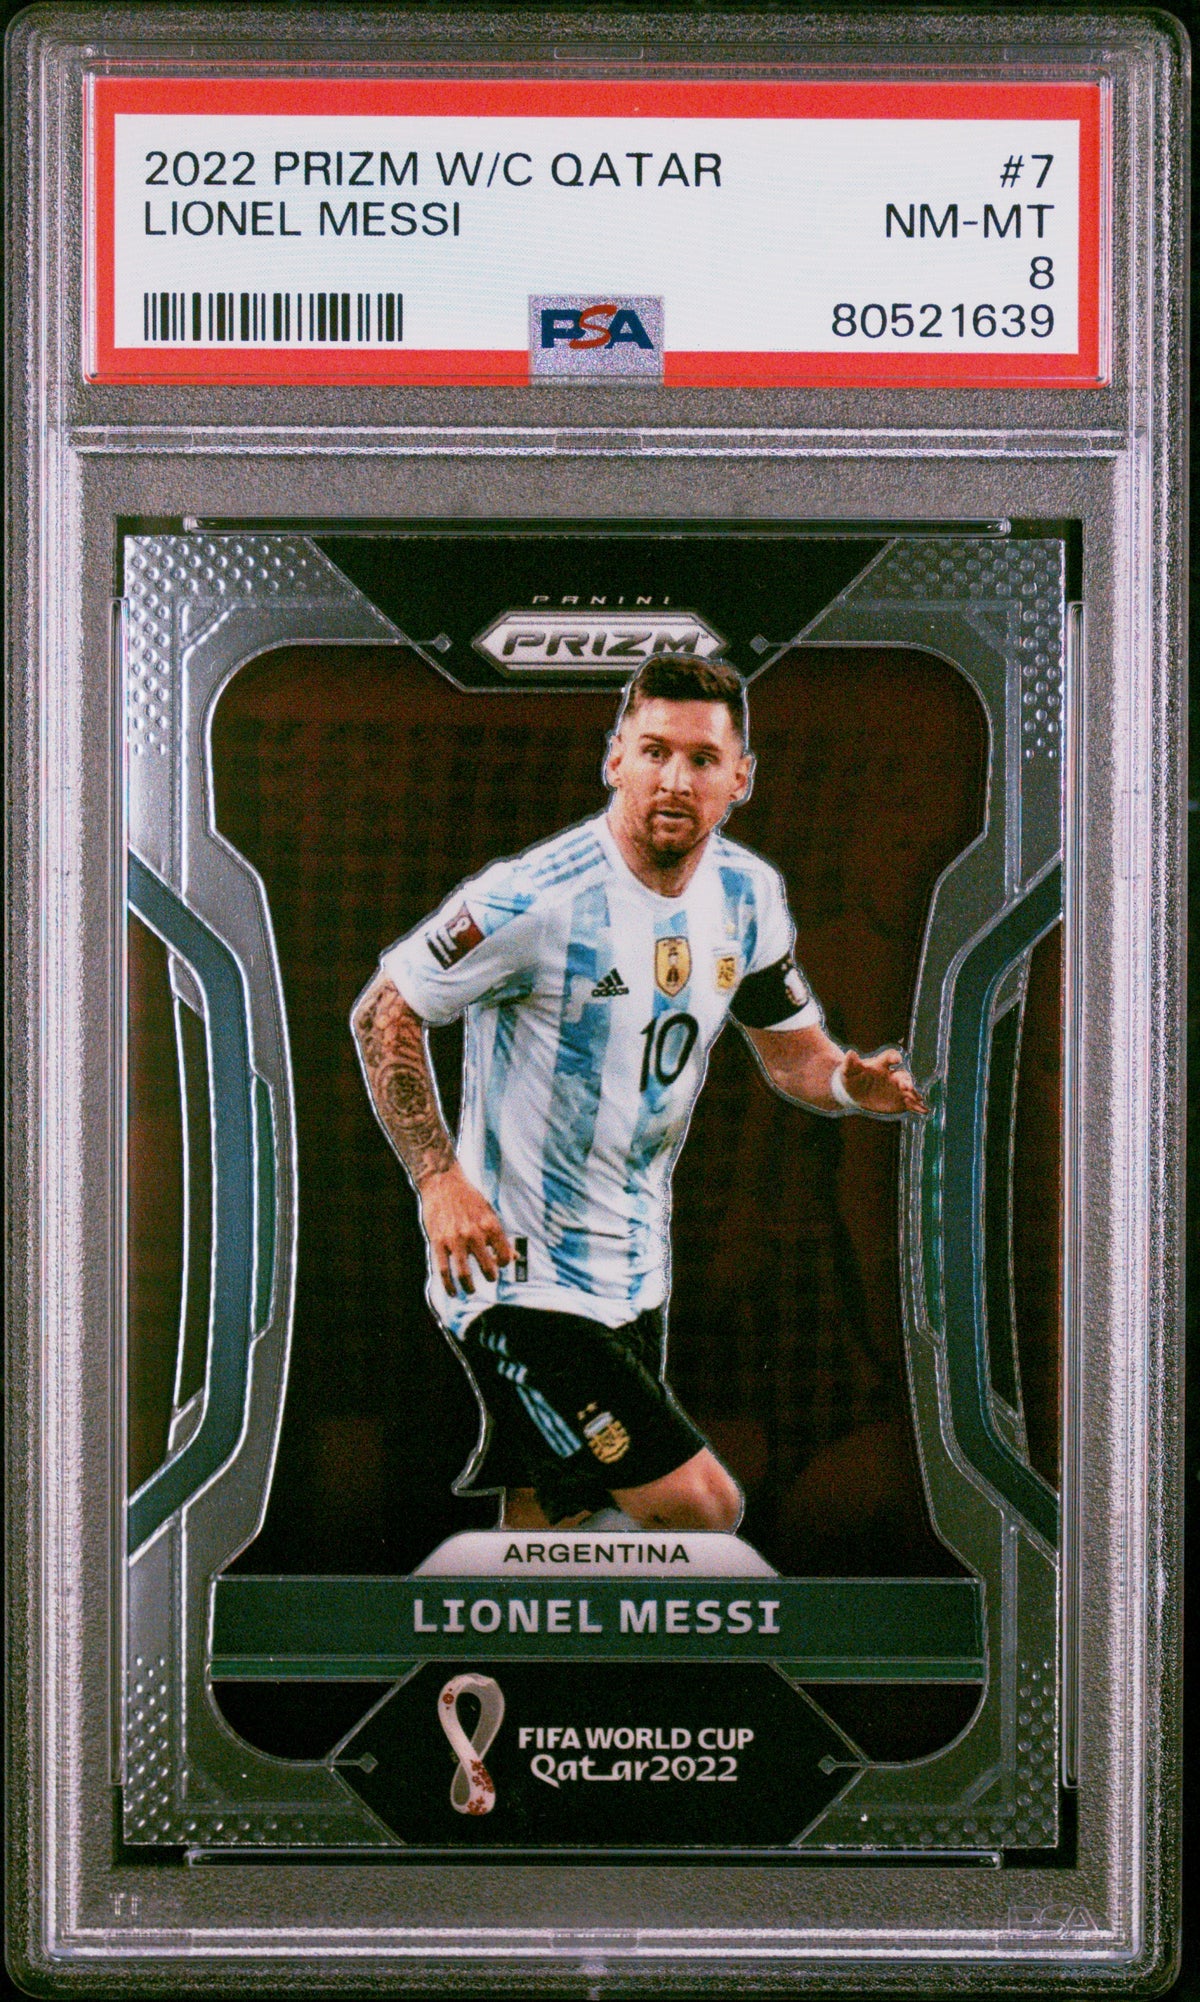 Lionel Messi 2014 Panini Prizm World Cup Soccer Card #12 Graded PSA 8